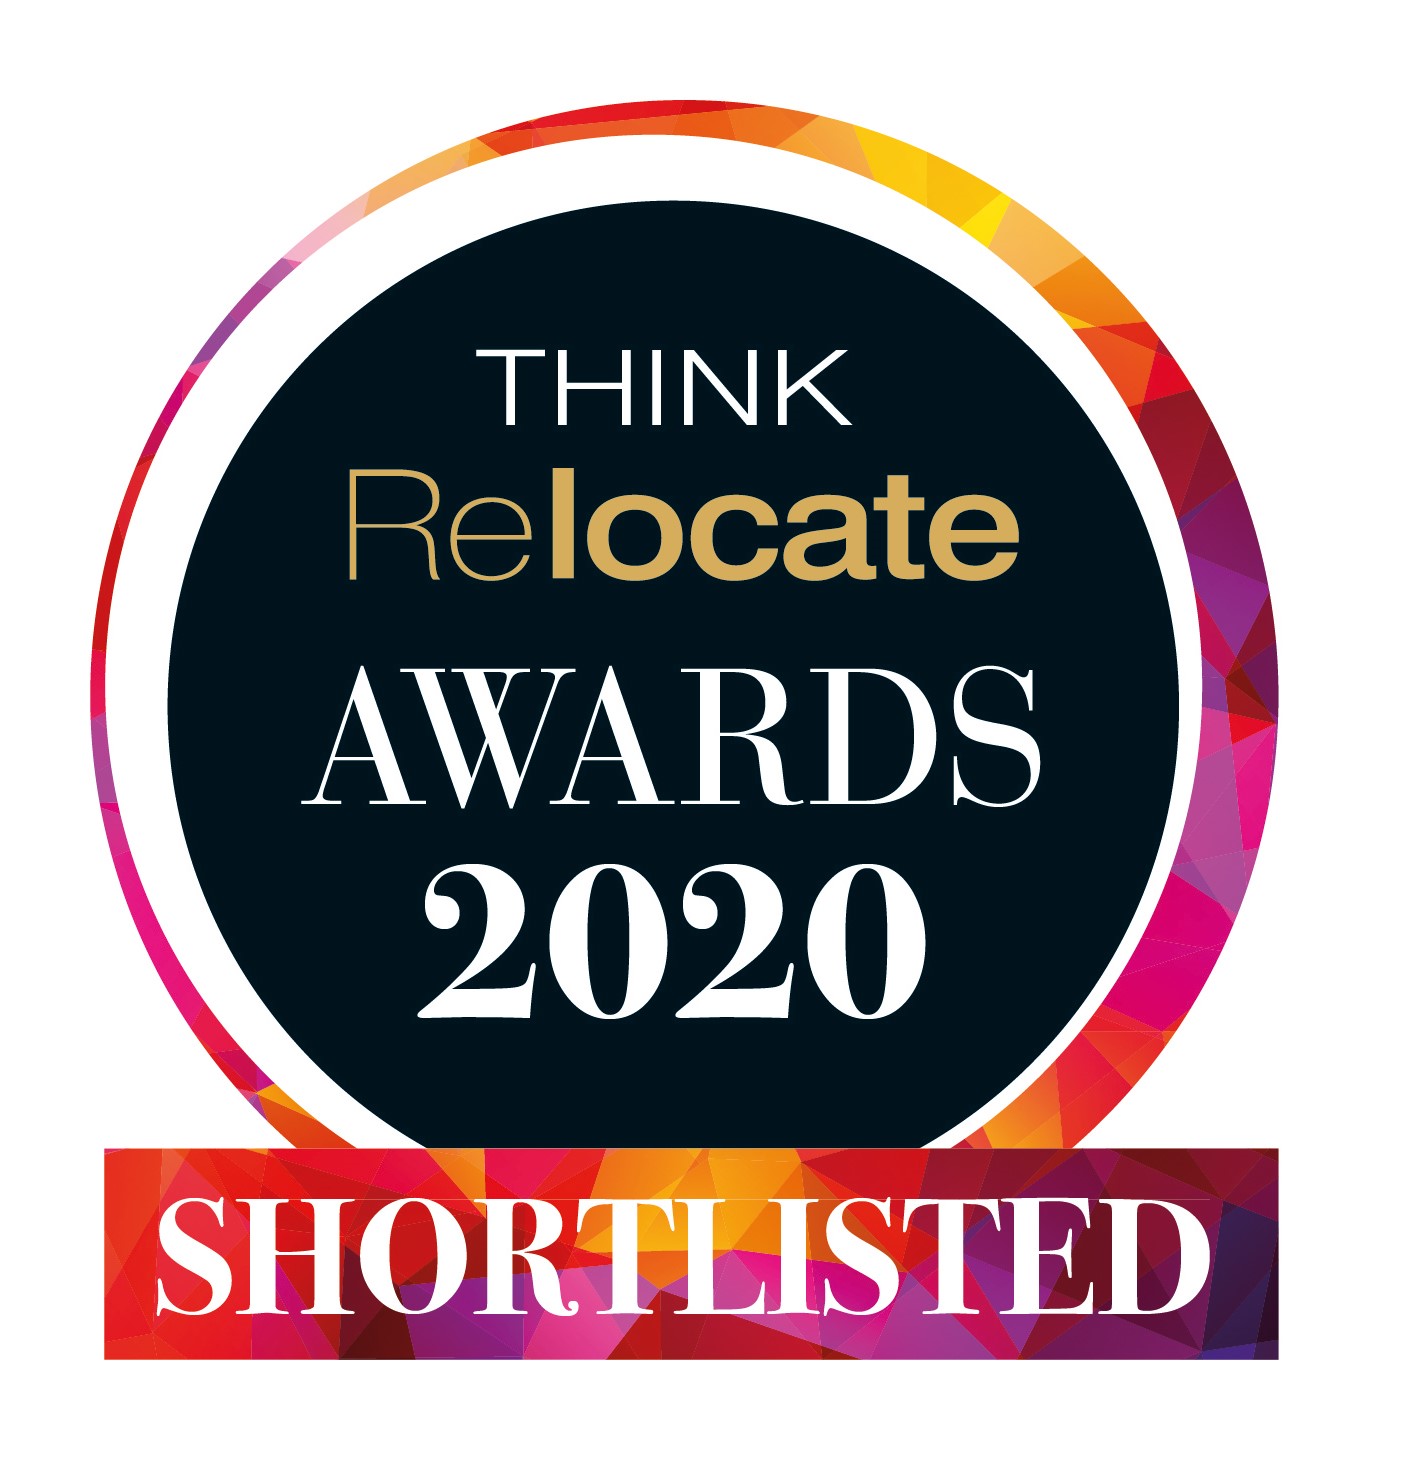 Relocate Awards 2020